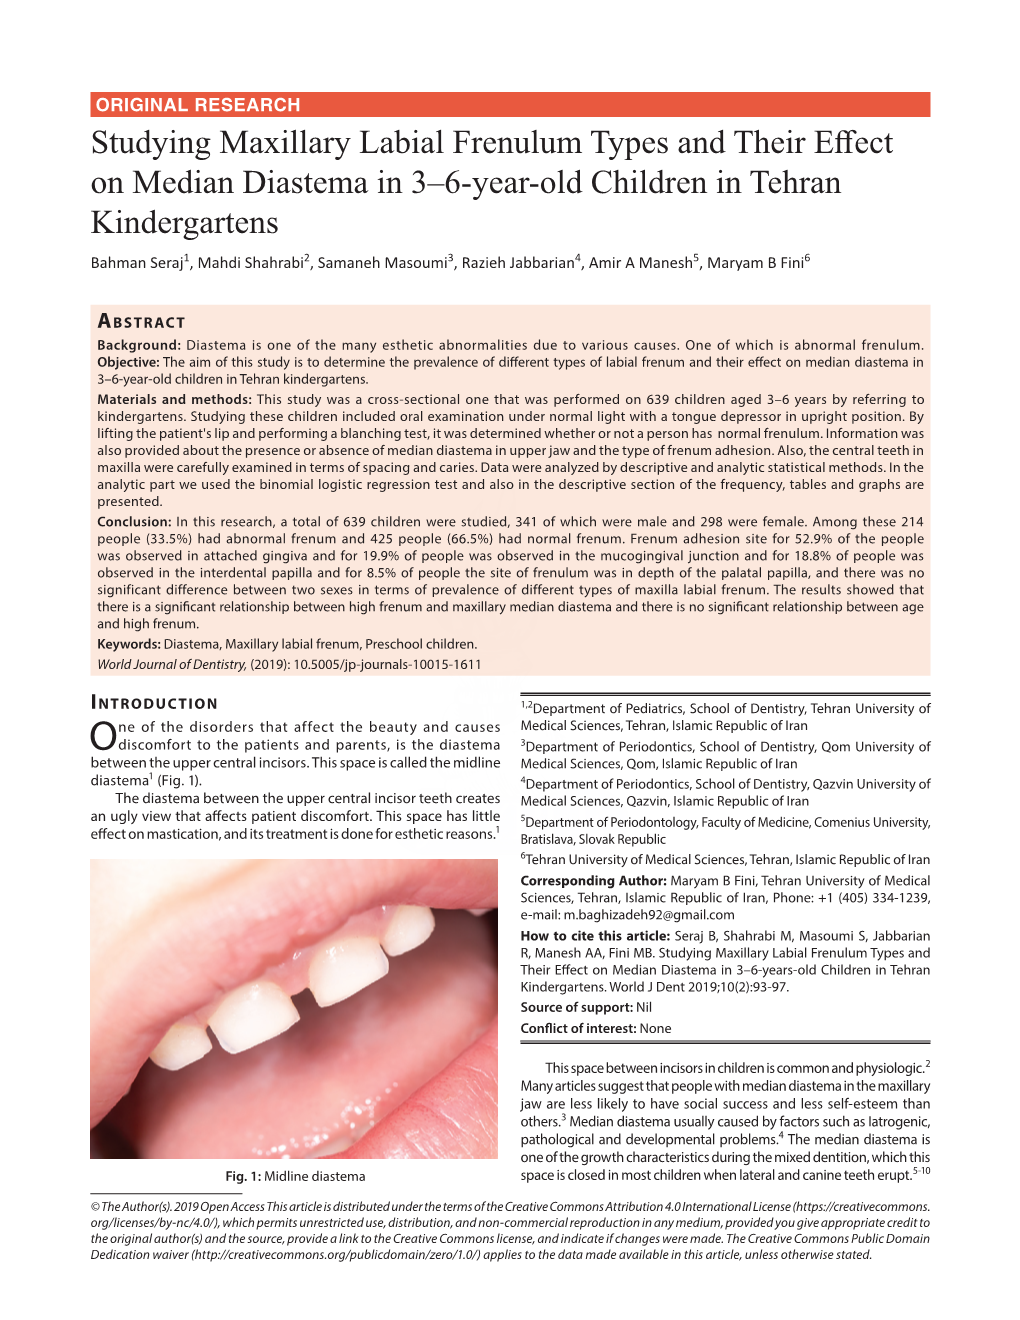 Studying Maxillary Labial Frenulum Types and Their Effect on Median Diastema in 3–6-Year-Old Children in Tehran Kindergartens